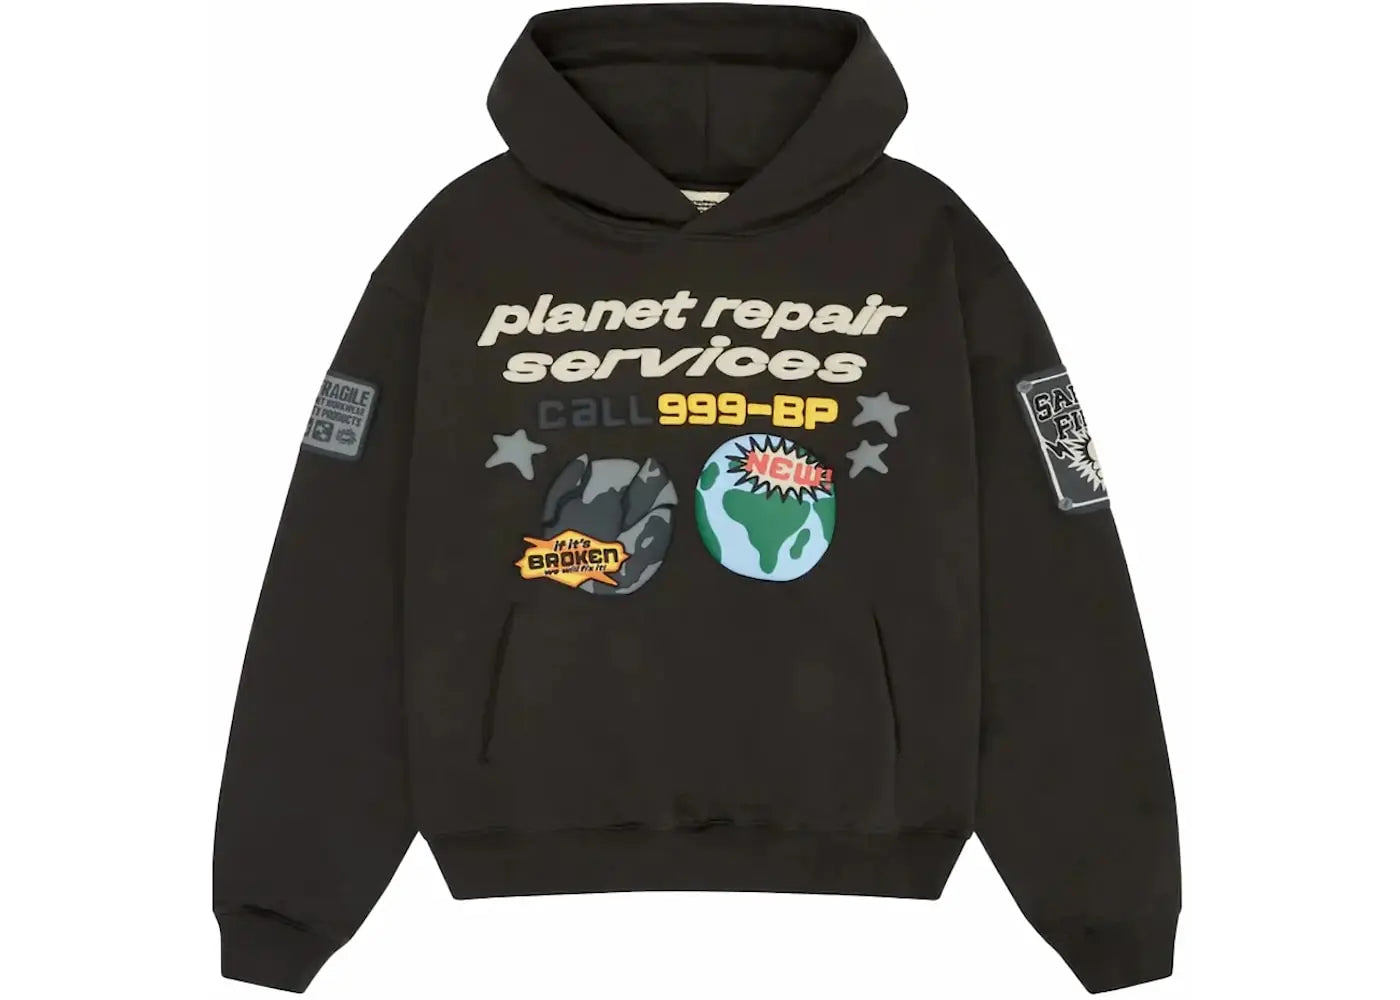 Broken Planet Repair Services Hoodie Soot Black in Auckland, New Zealand - Shop name